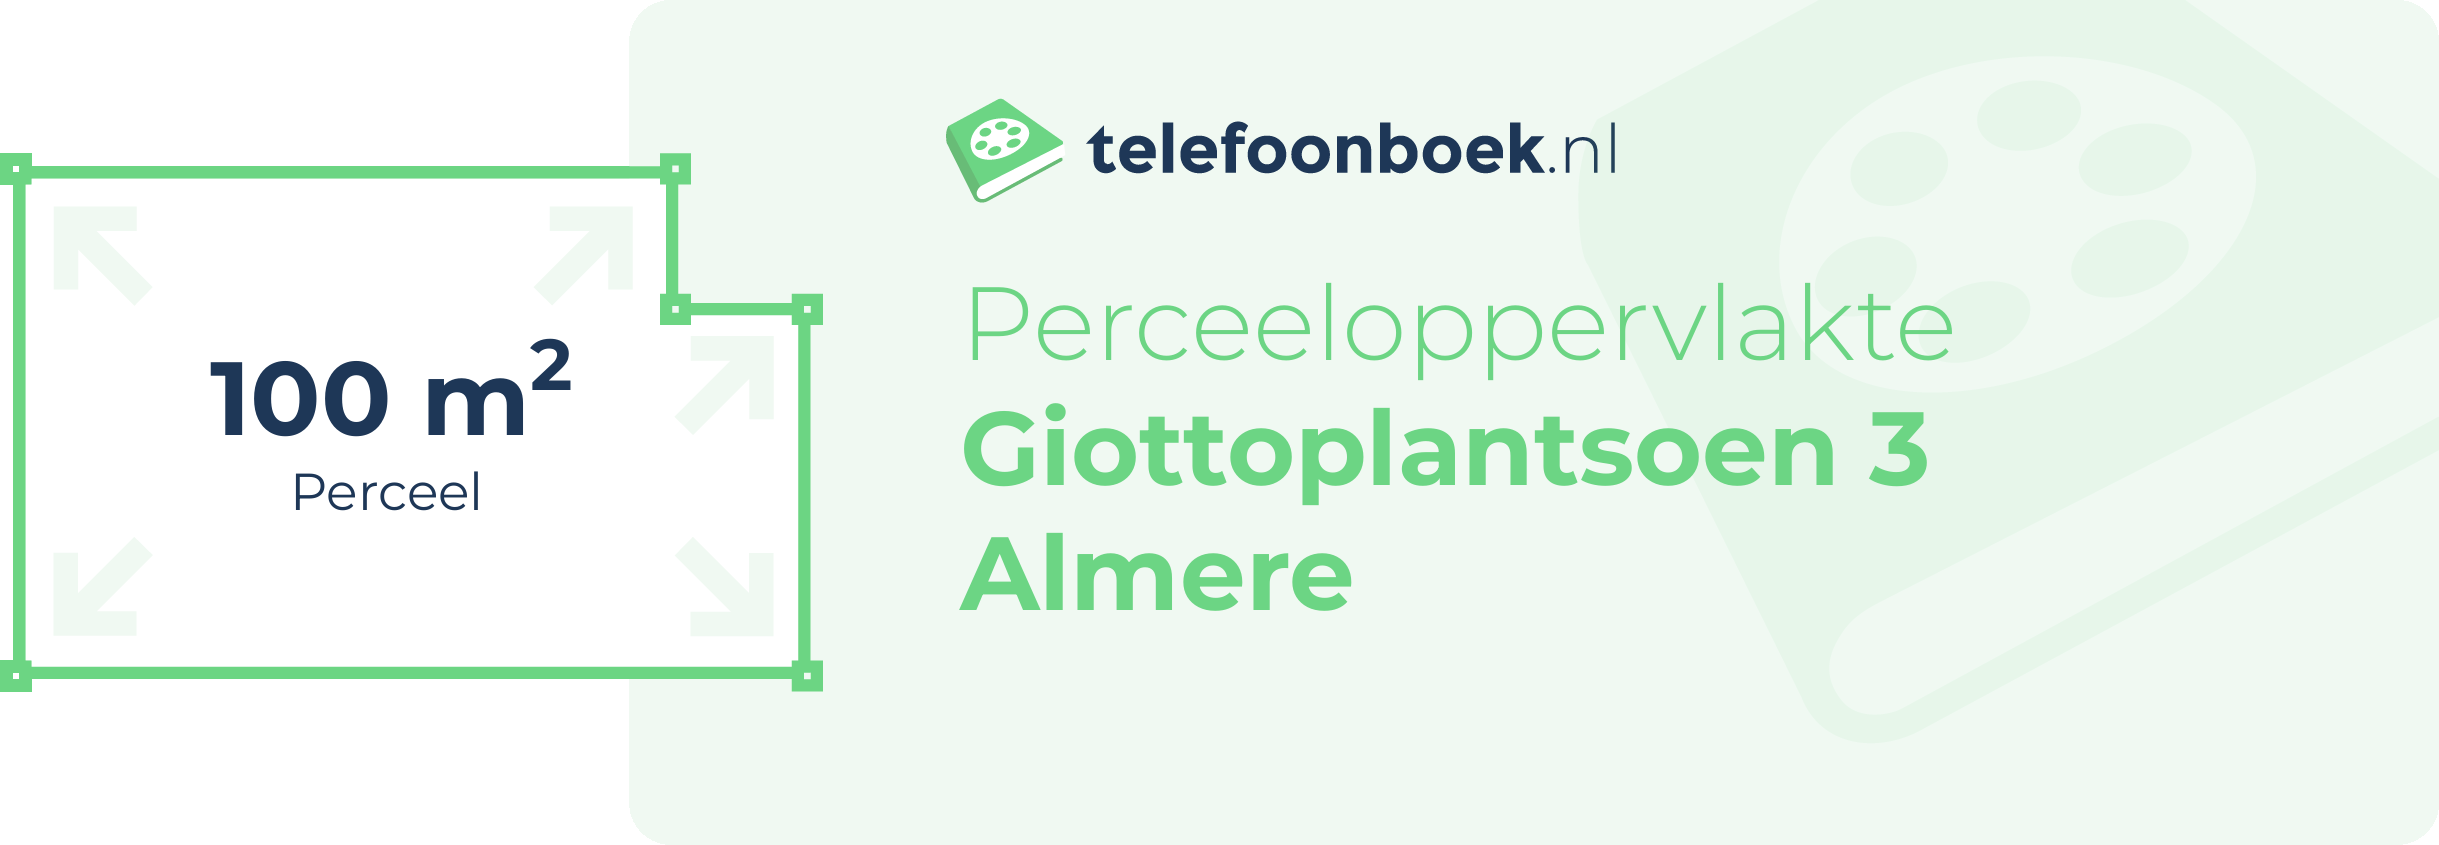 Perceeloppervlakte Giottoplantsoen 3 Almere